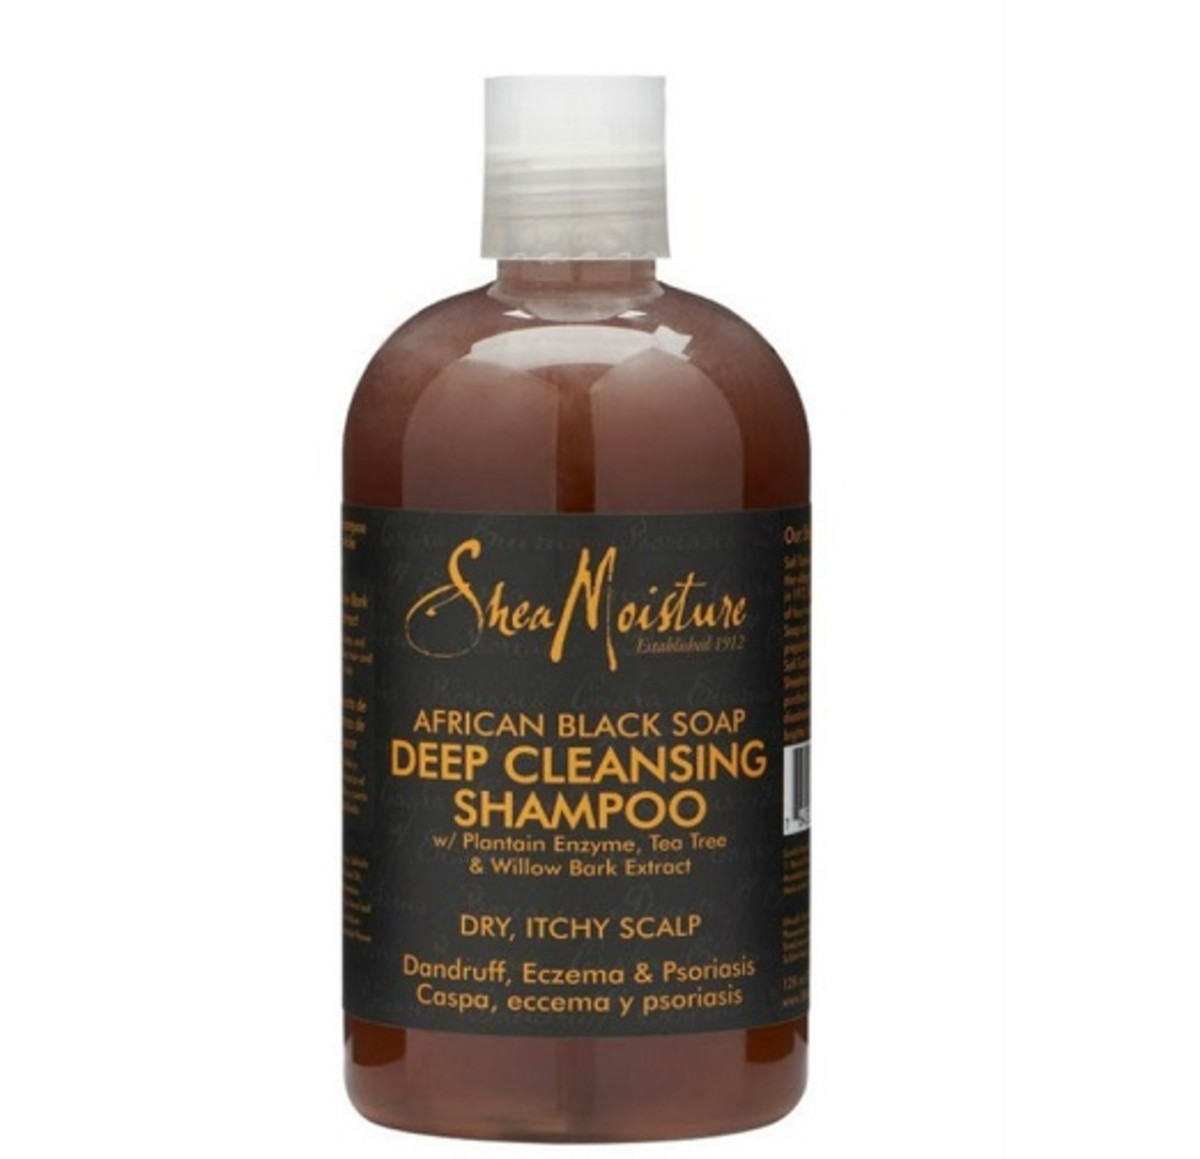 Shea Moisture's African Black Soap Deep Cleansing Shampoo